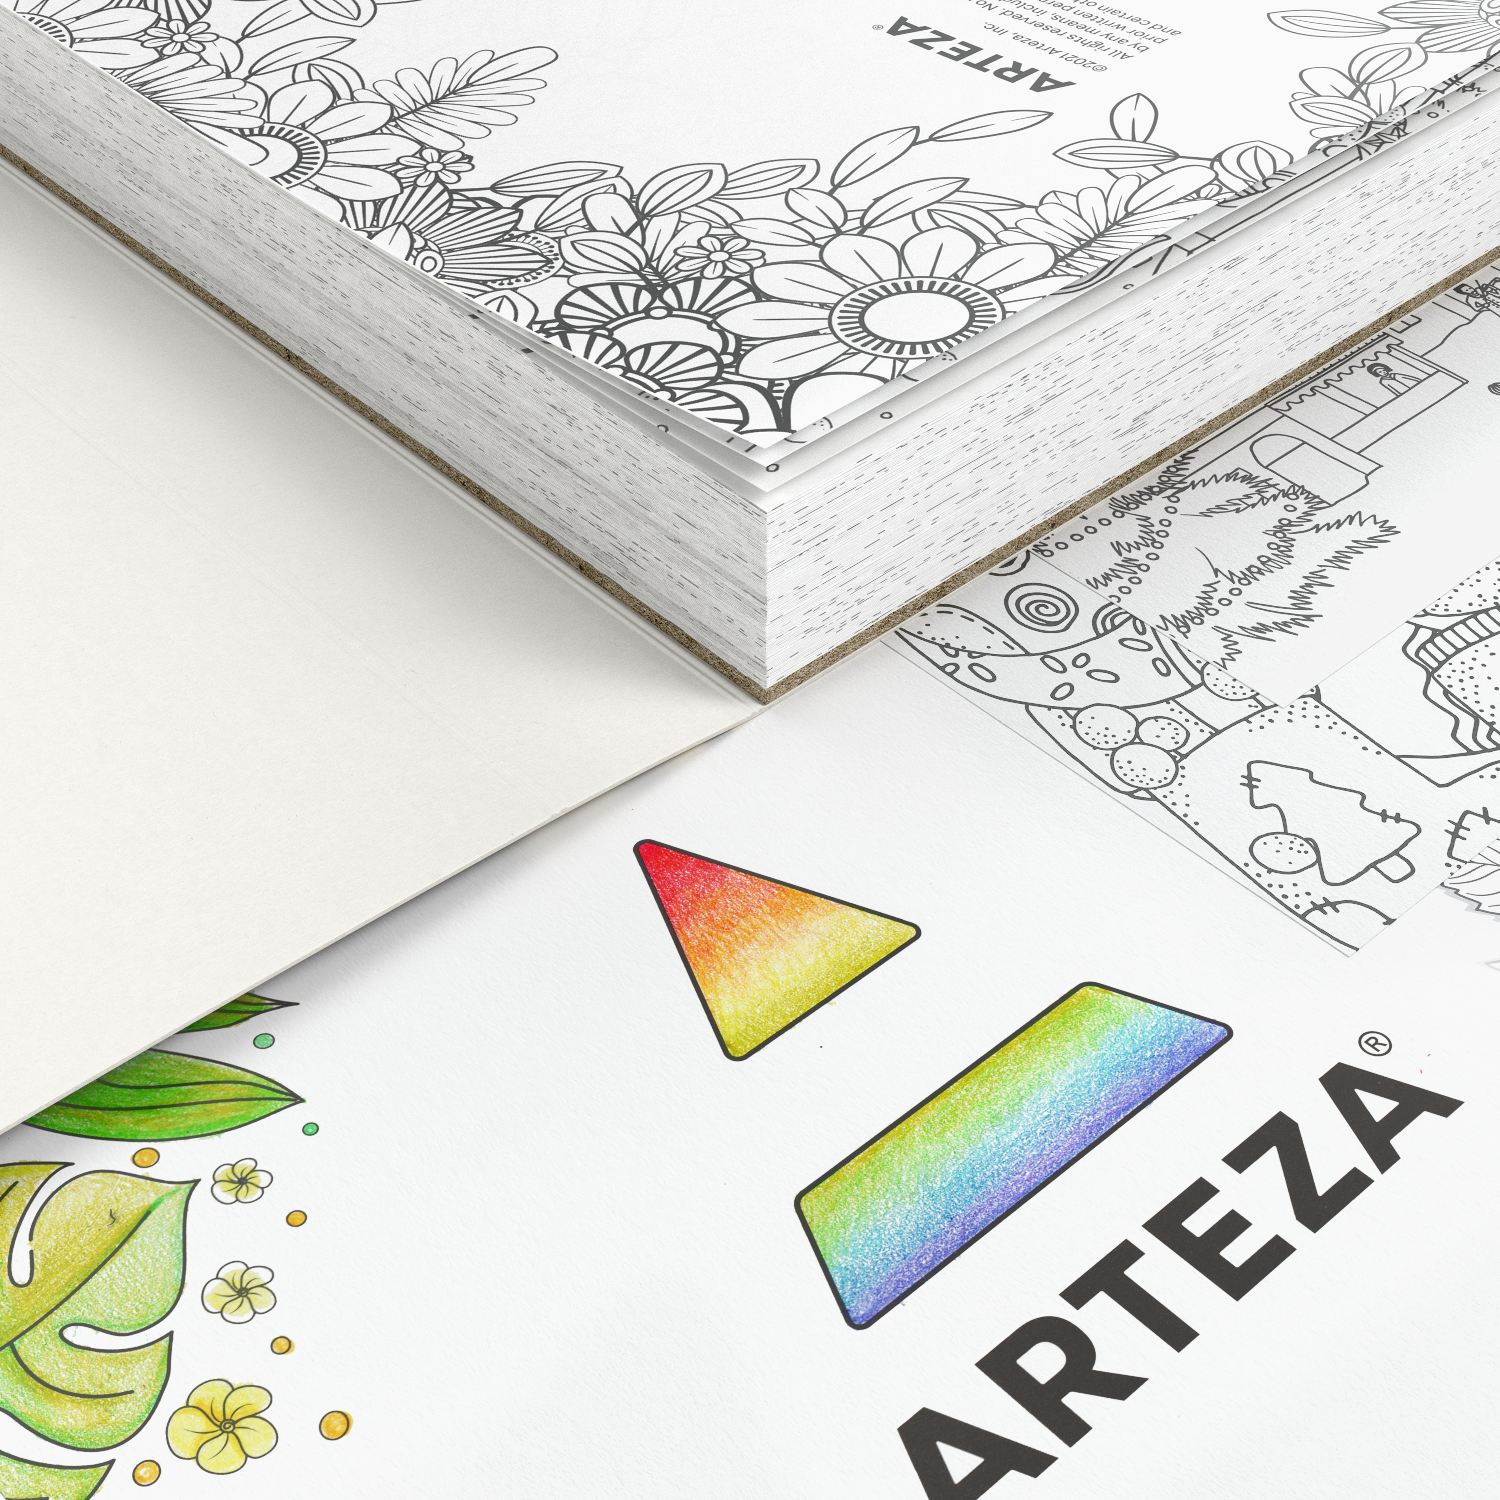 Arteza Adult Coloring Book, Ocean Illustrations, 6.4 inchX6.4 inch - 72 Sheets